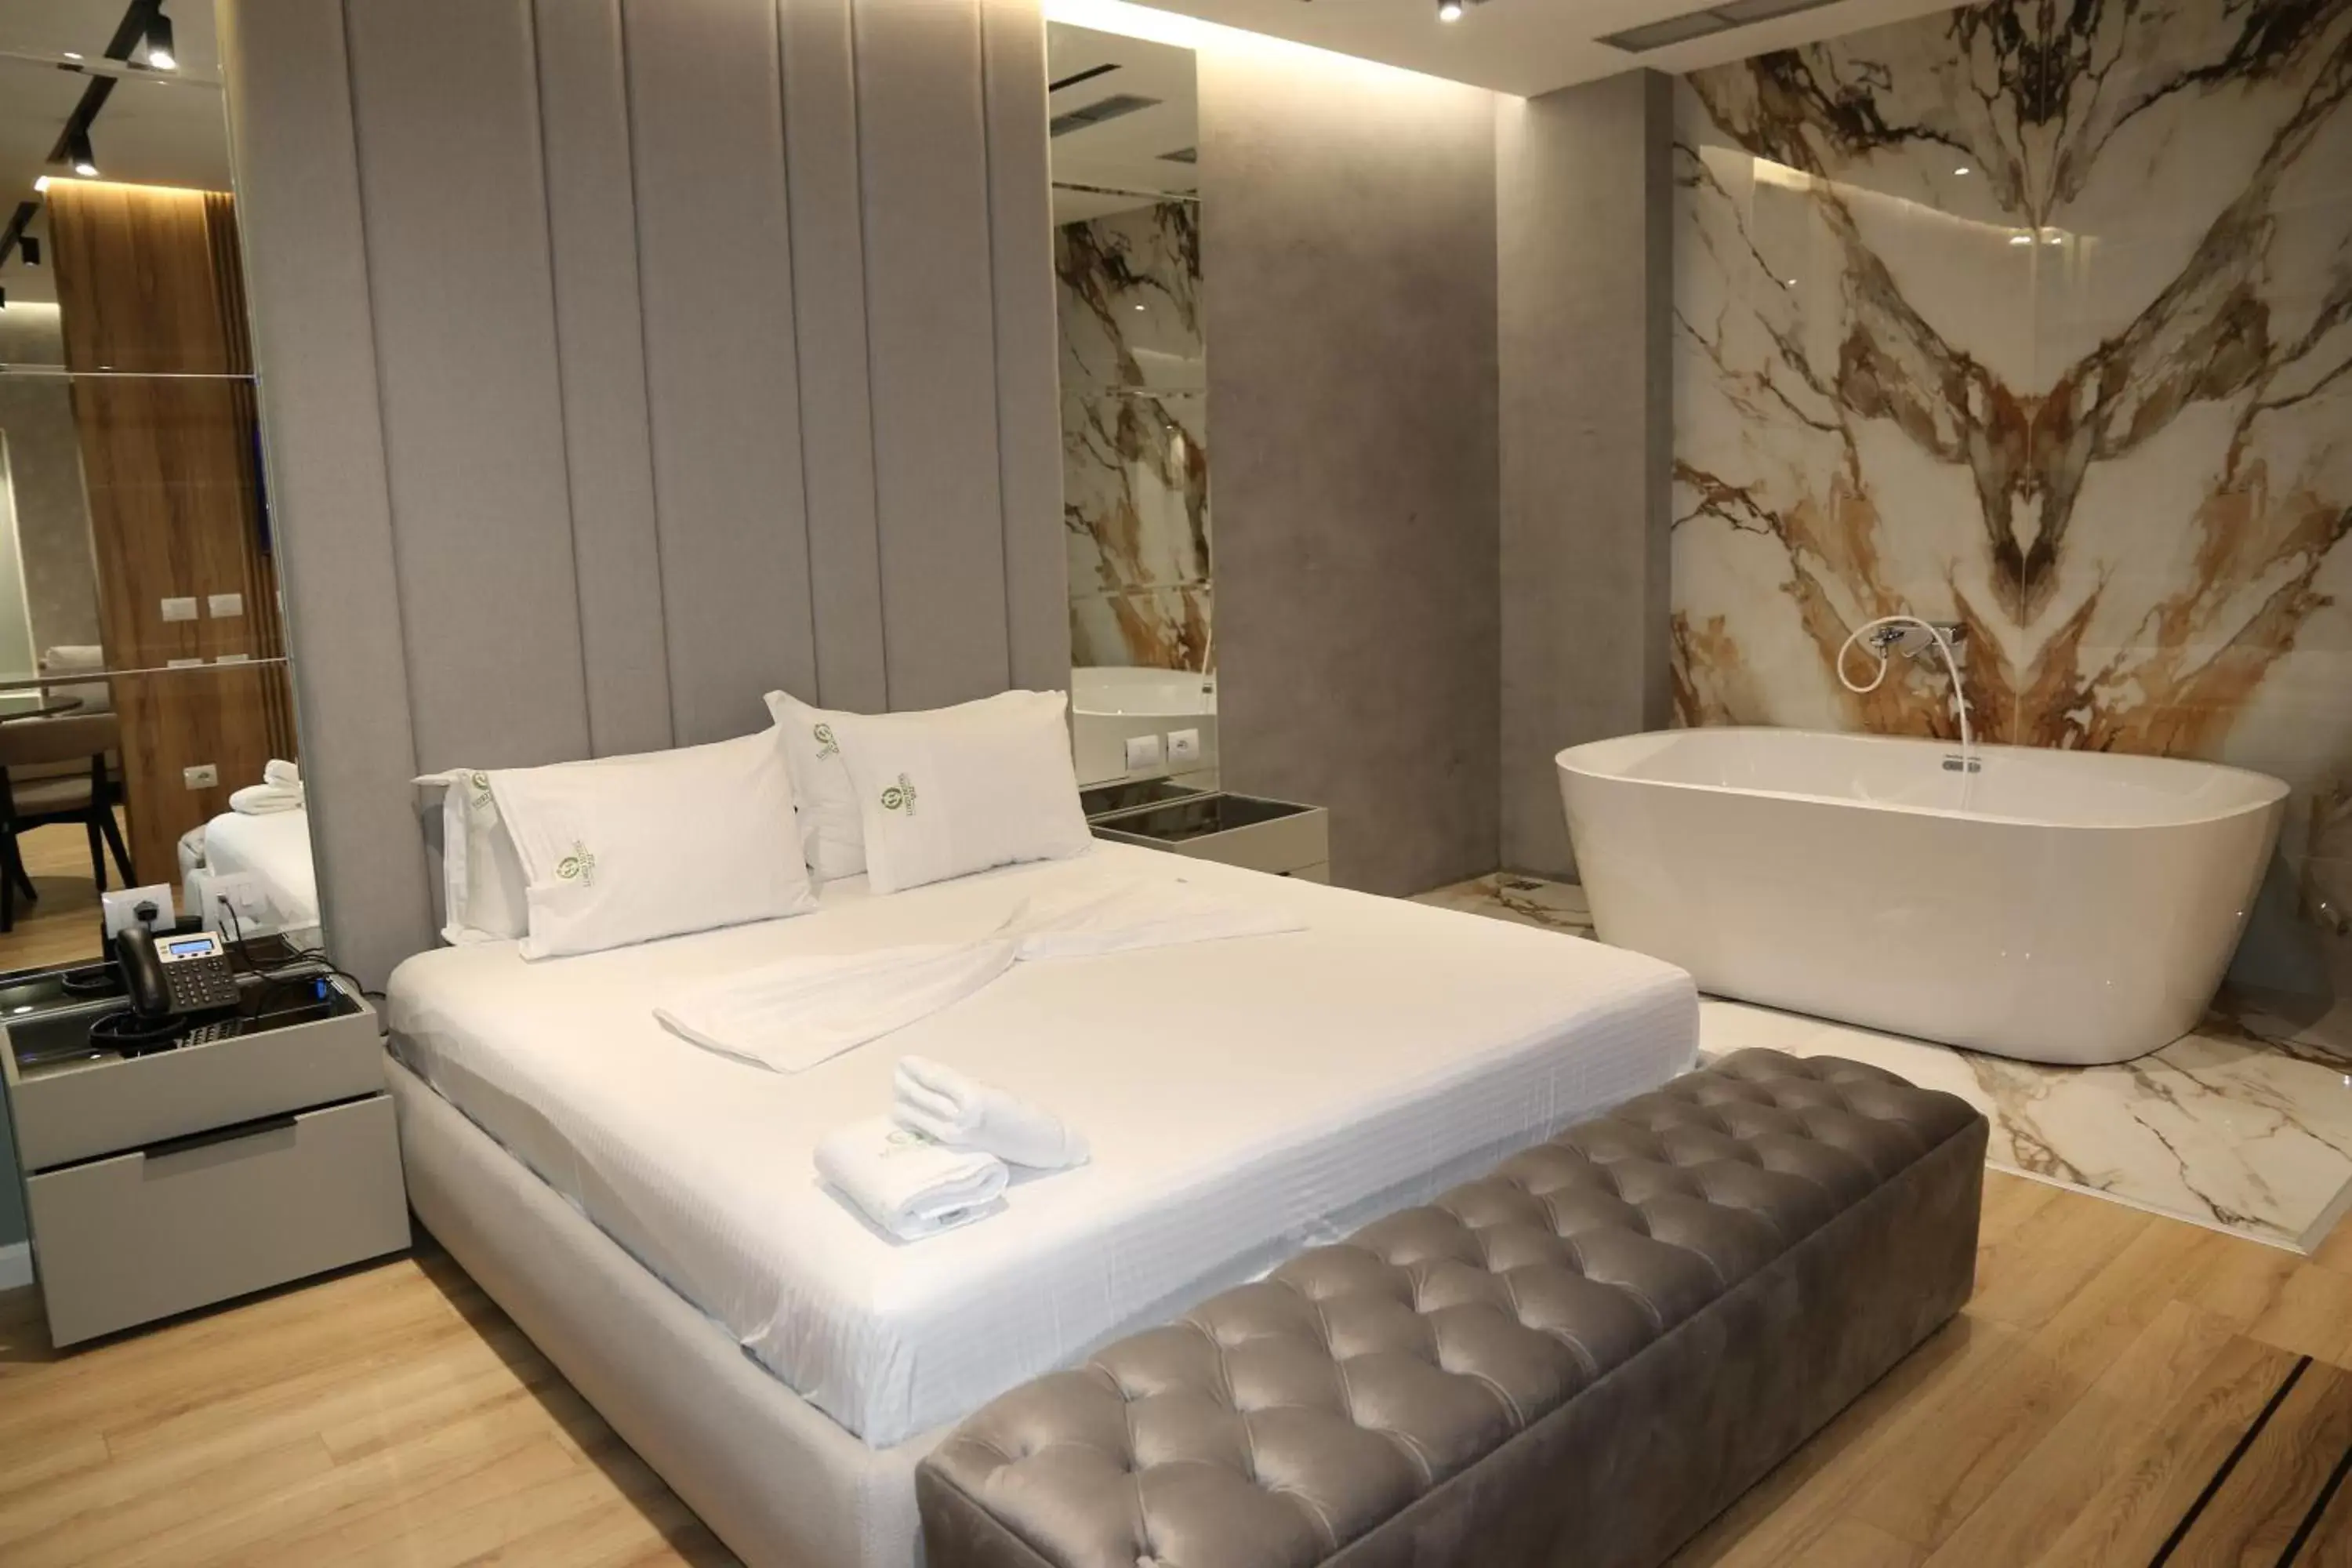 Bed in LORD Hotel Tirana